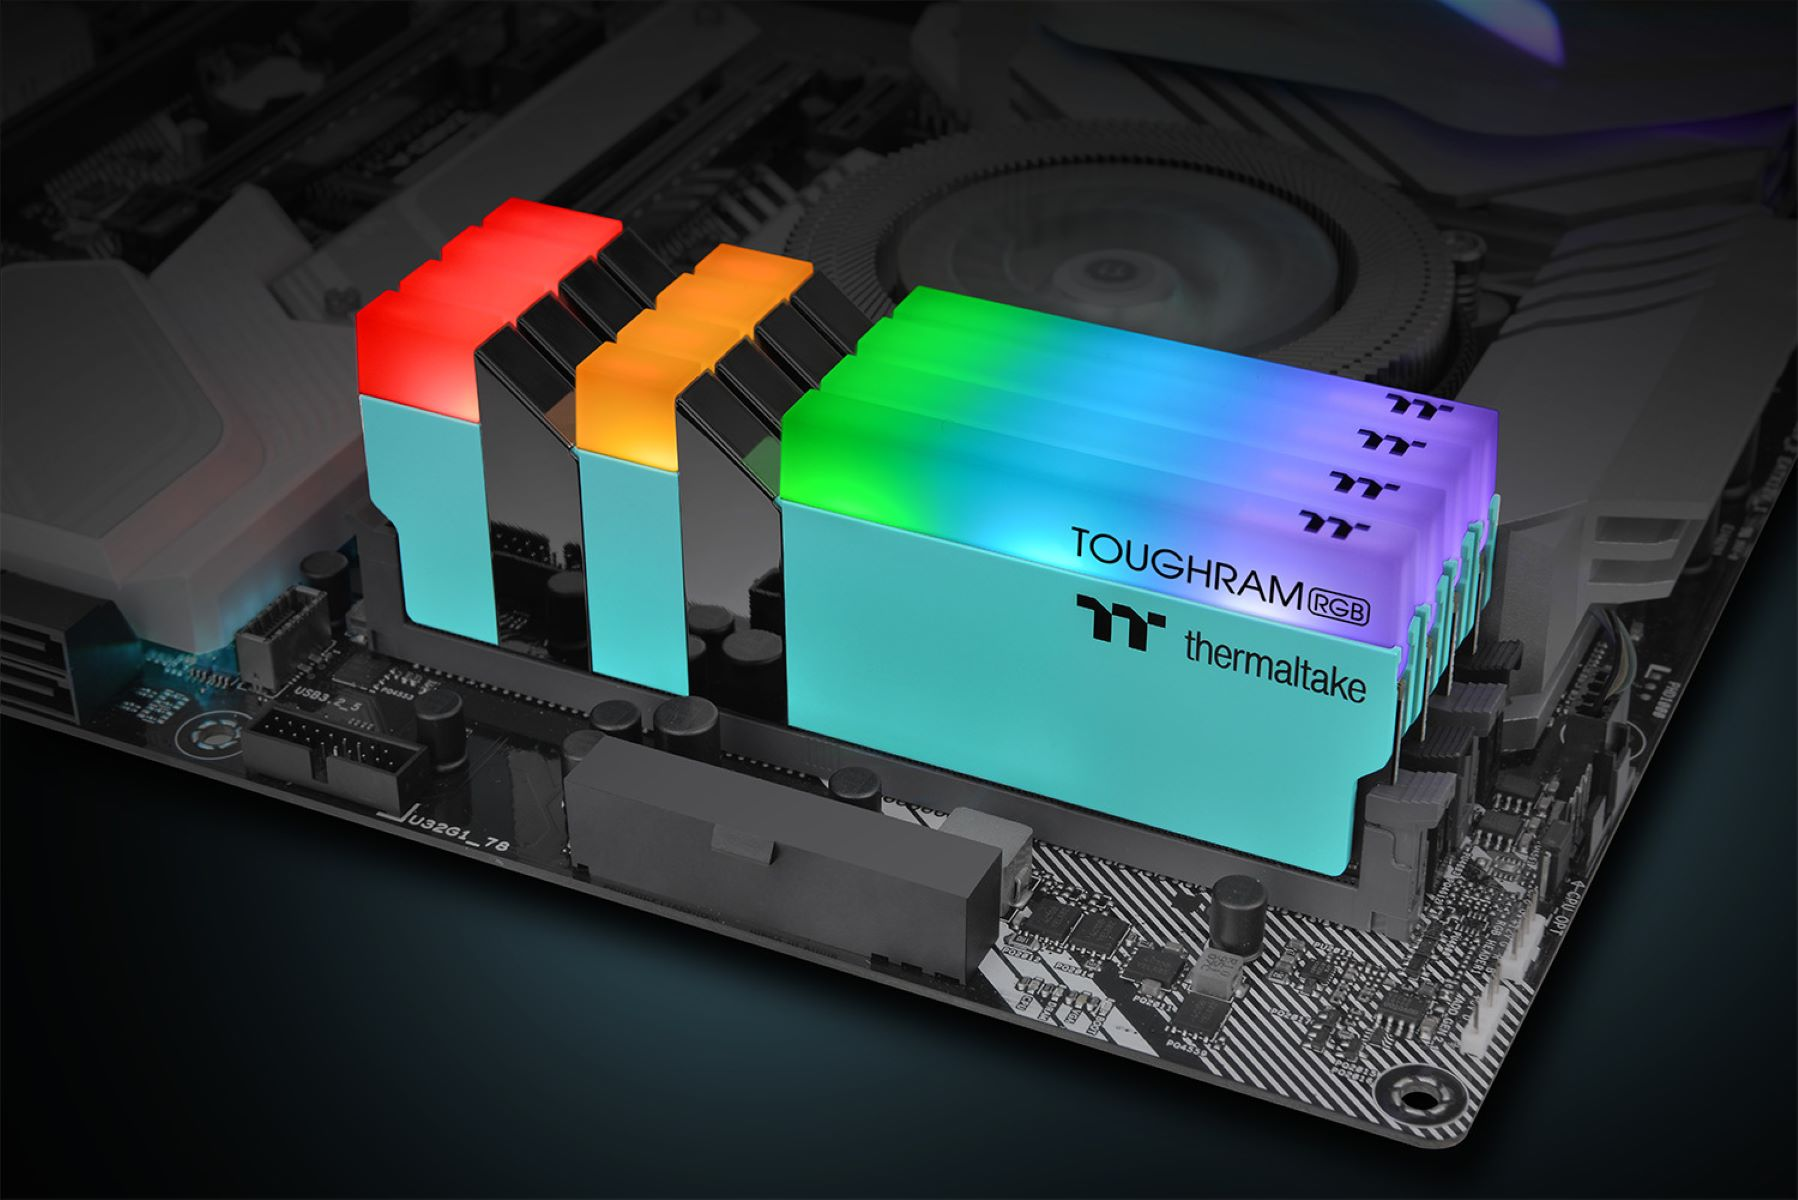 THERMALTAKE TOUGHRAM Arbeitsspeicher 16 Turquoise GB RGB DDR4